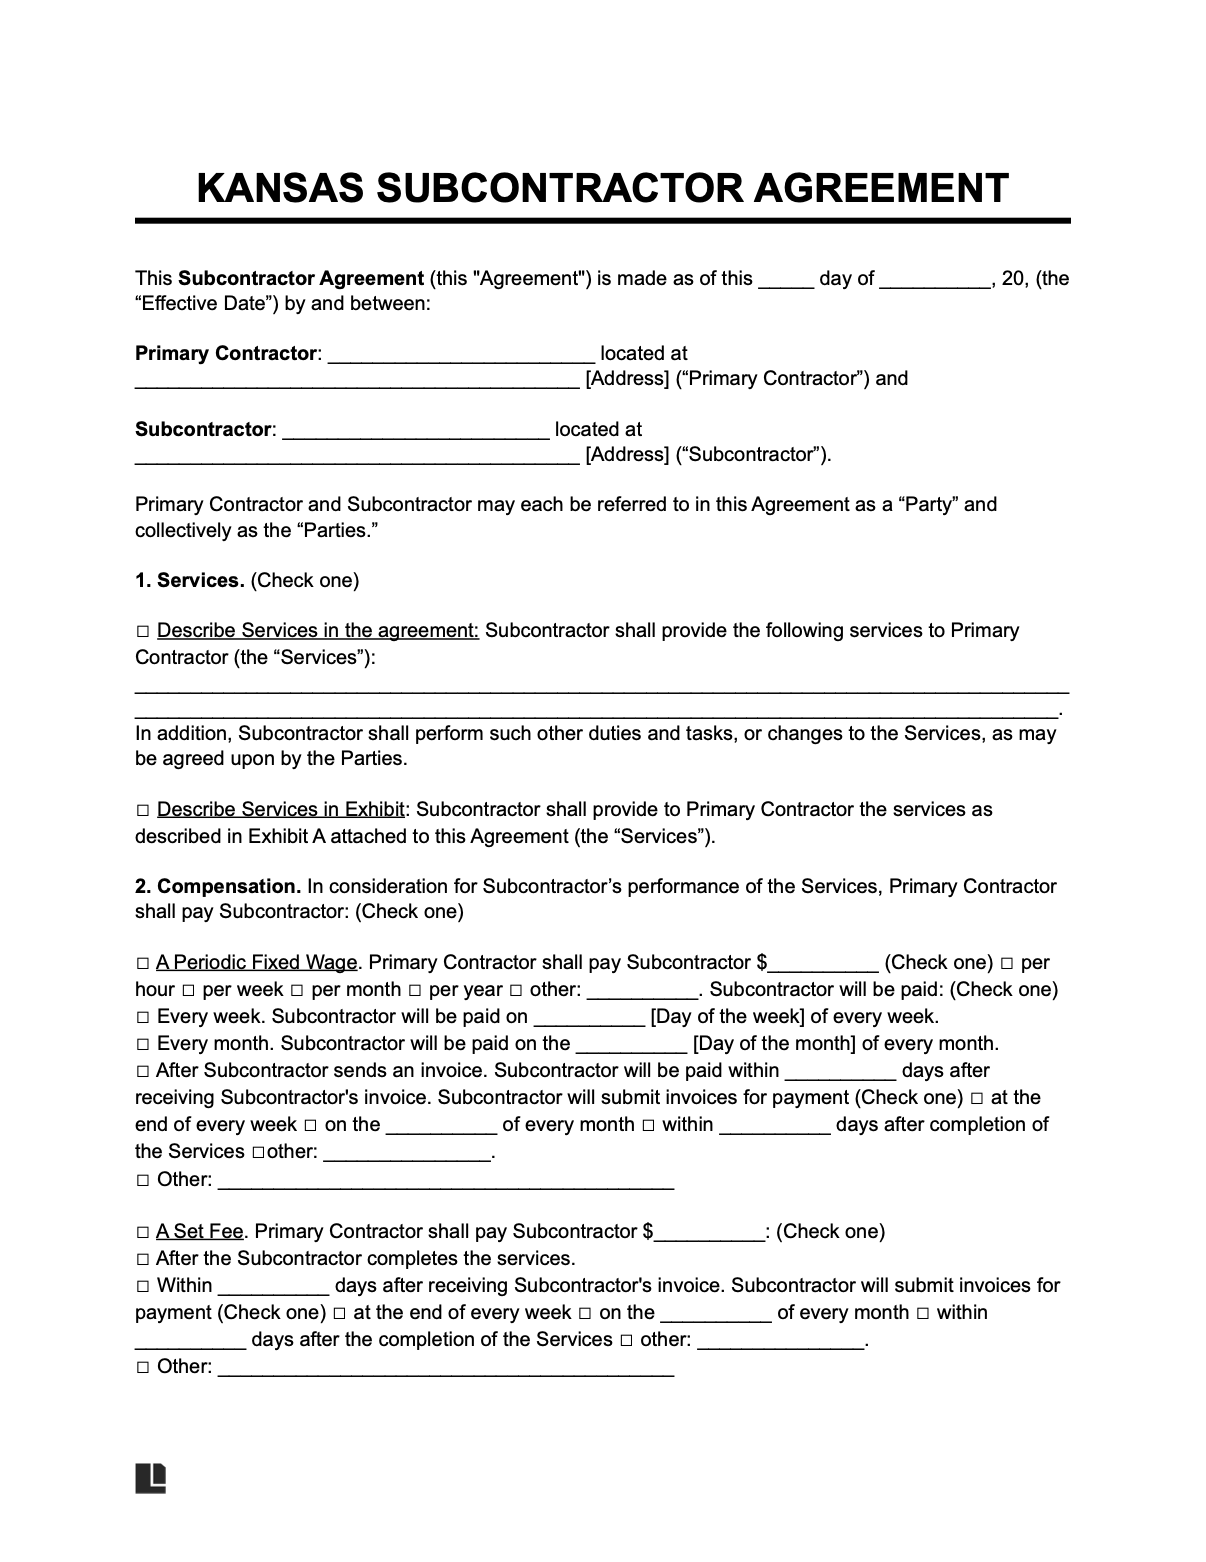 kansas subcontractor agreement template